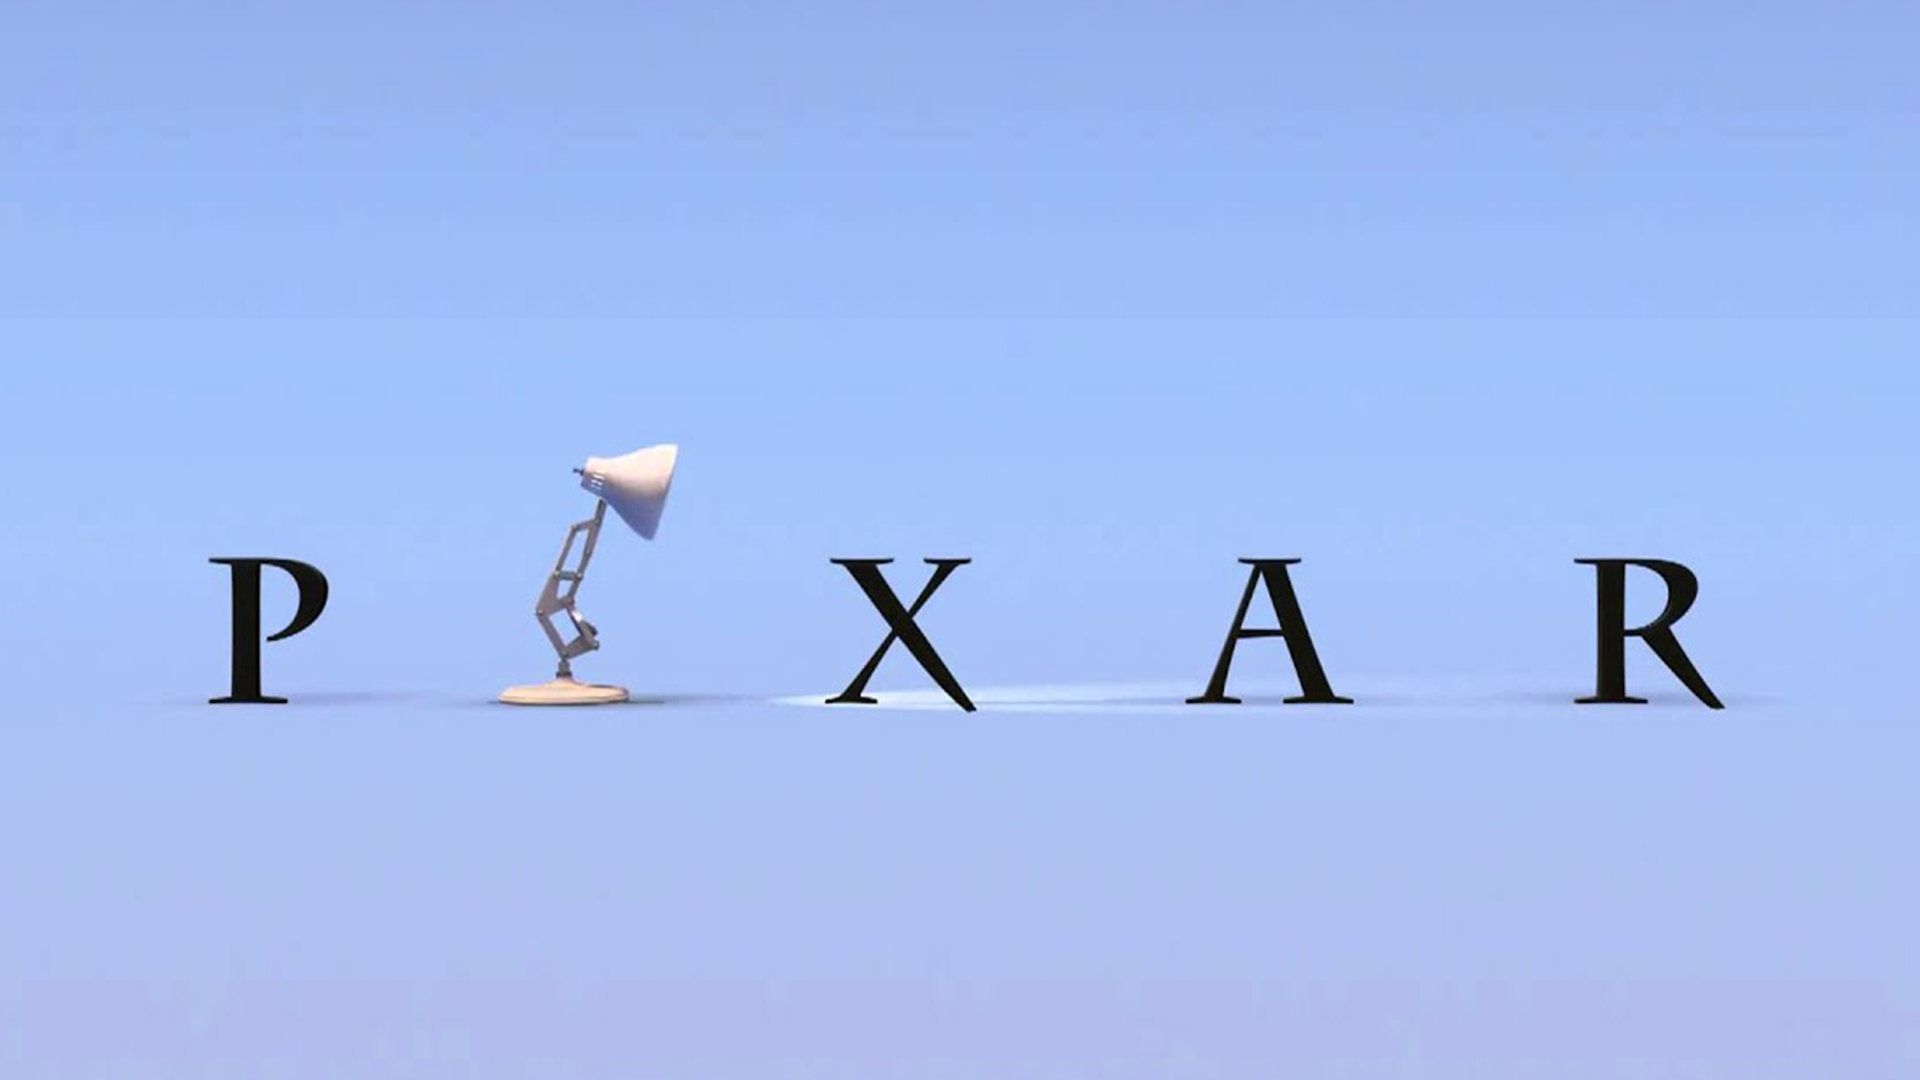 Horrifying totally the Pixar logo | Creative